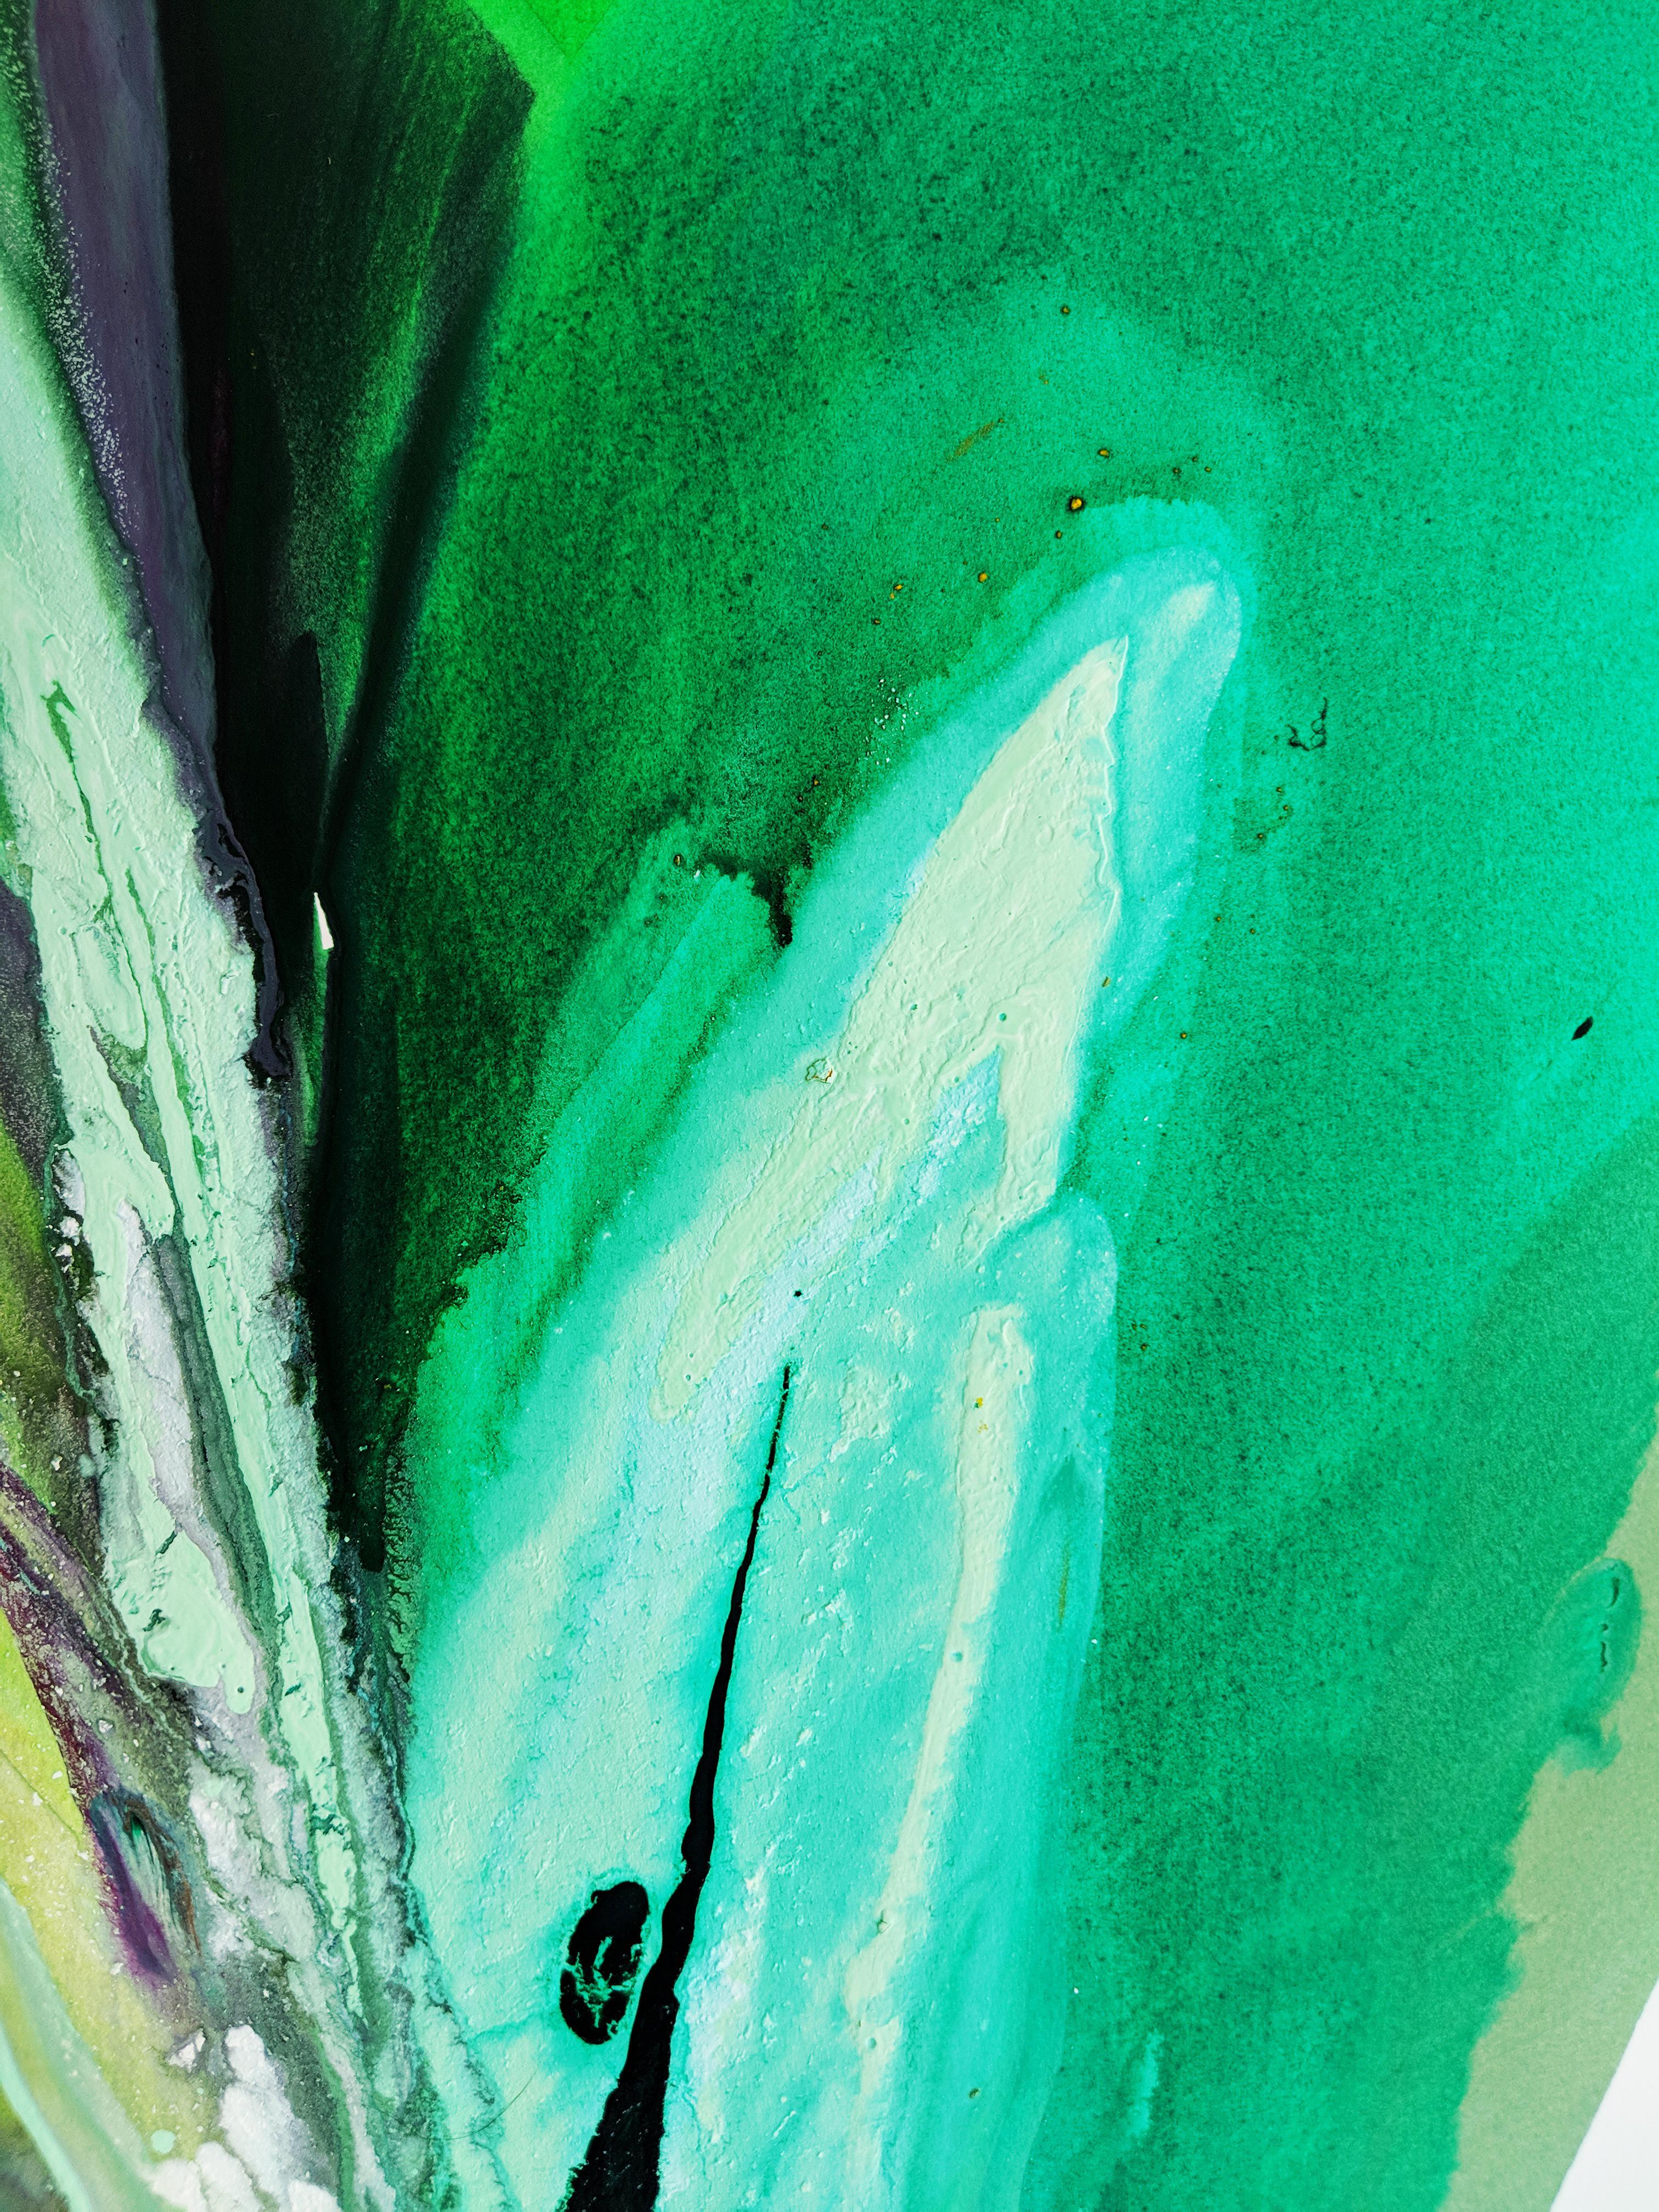 Green Rio De' Colore' #1 - Abstract Art by Robert Schoenfeld